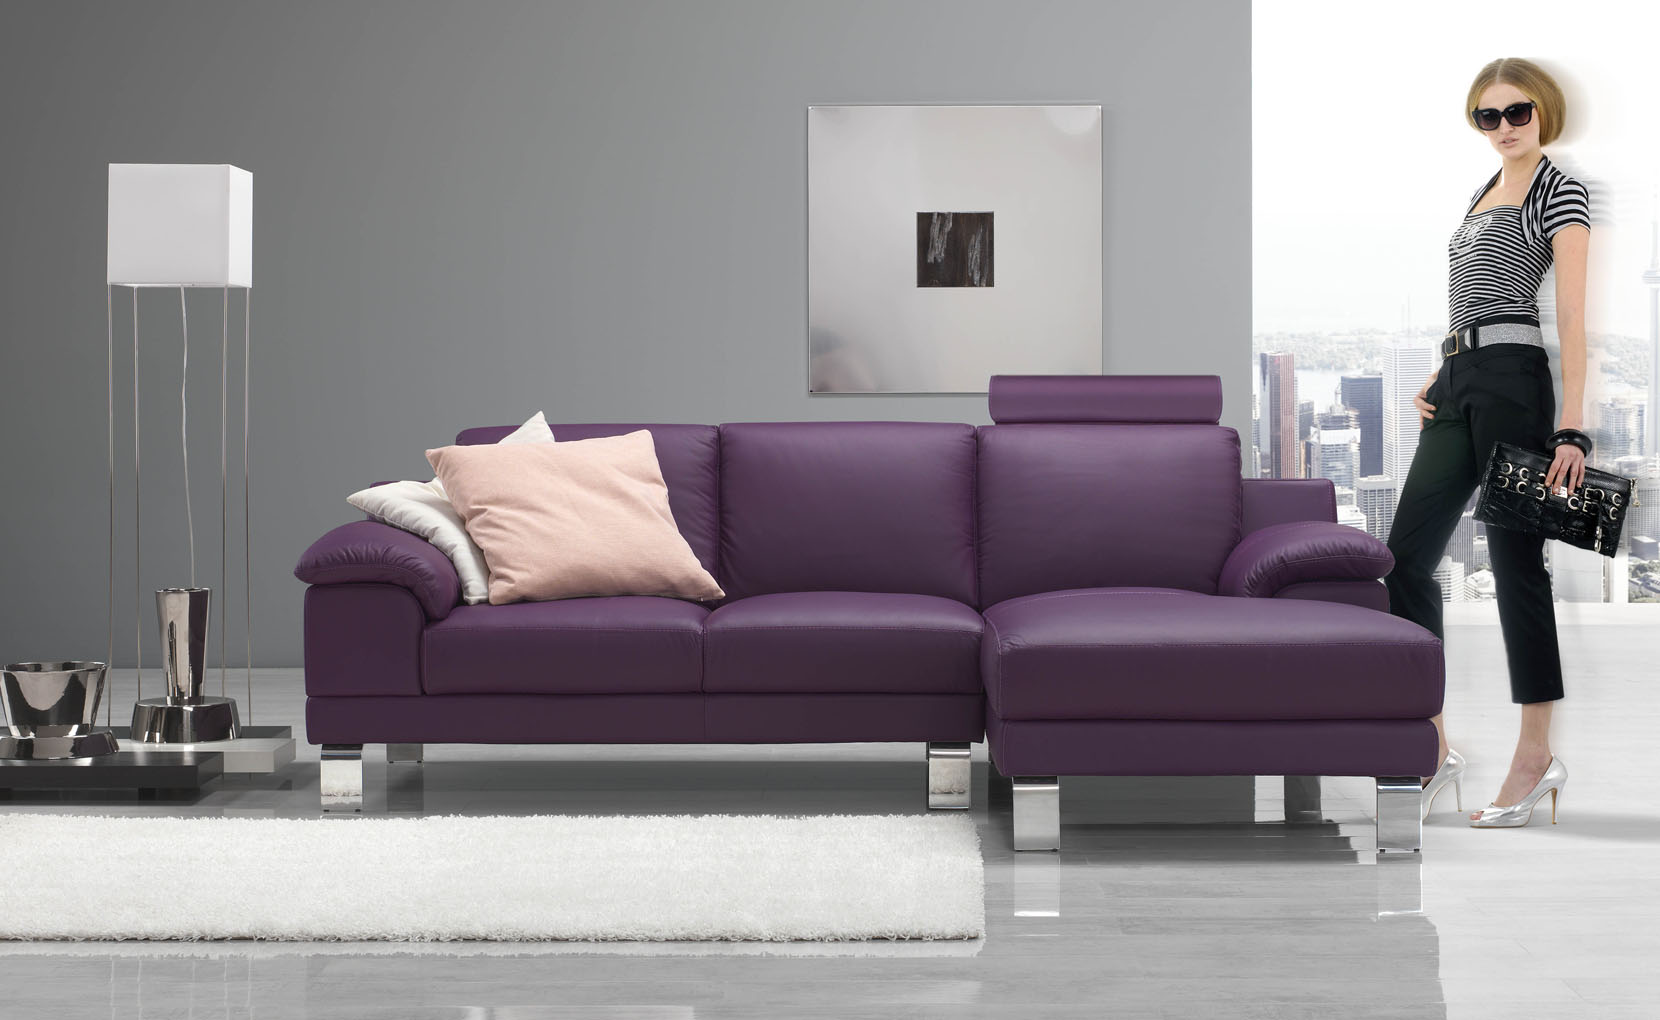 Free Sofa Italiano Living Company. The available Ultimate at Ego